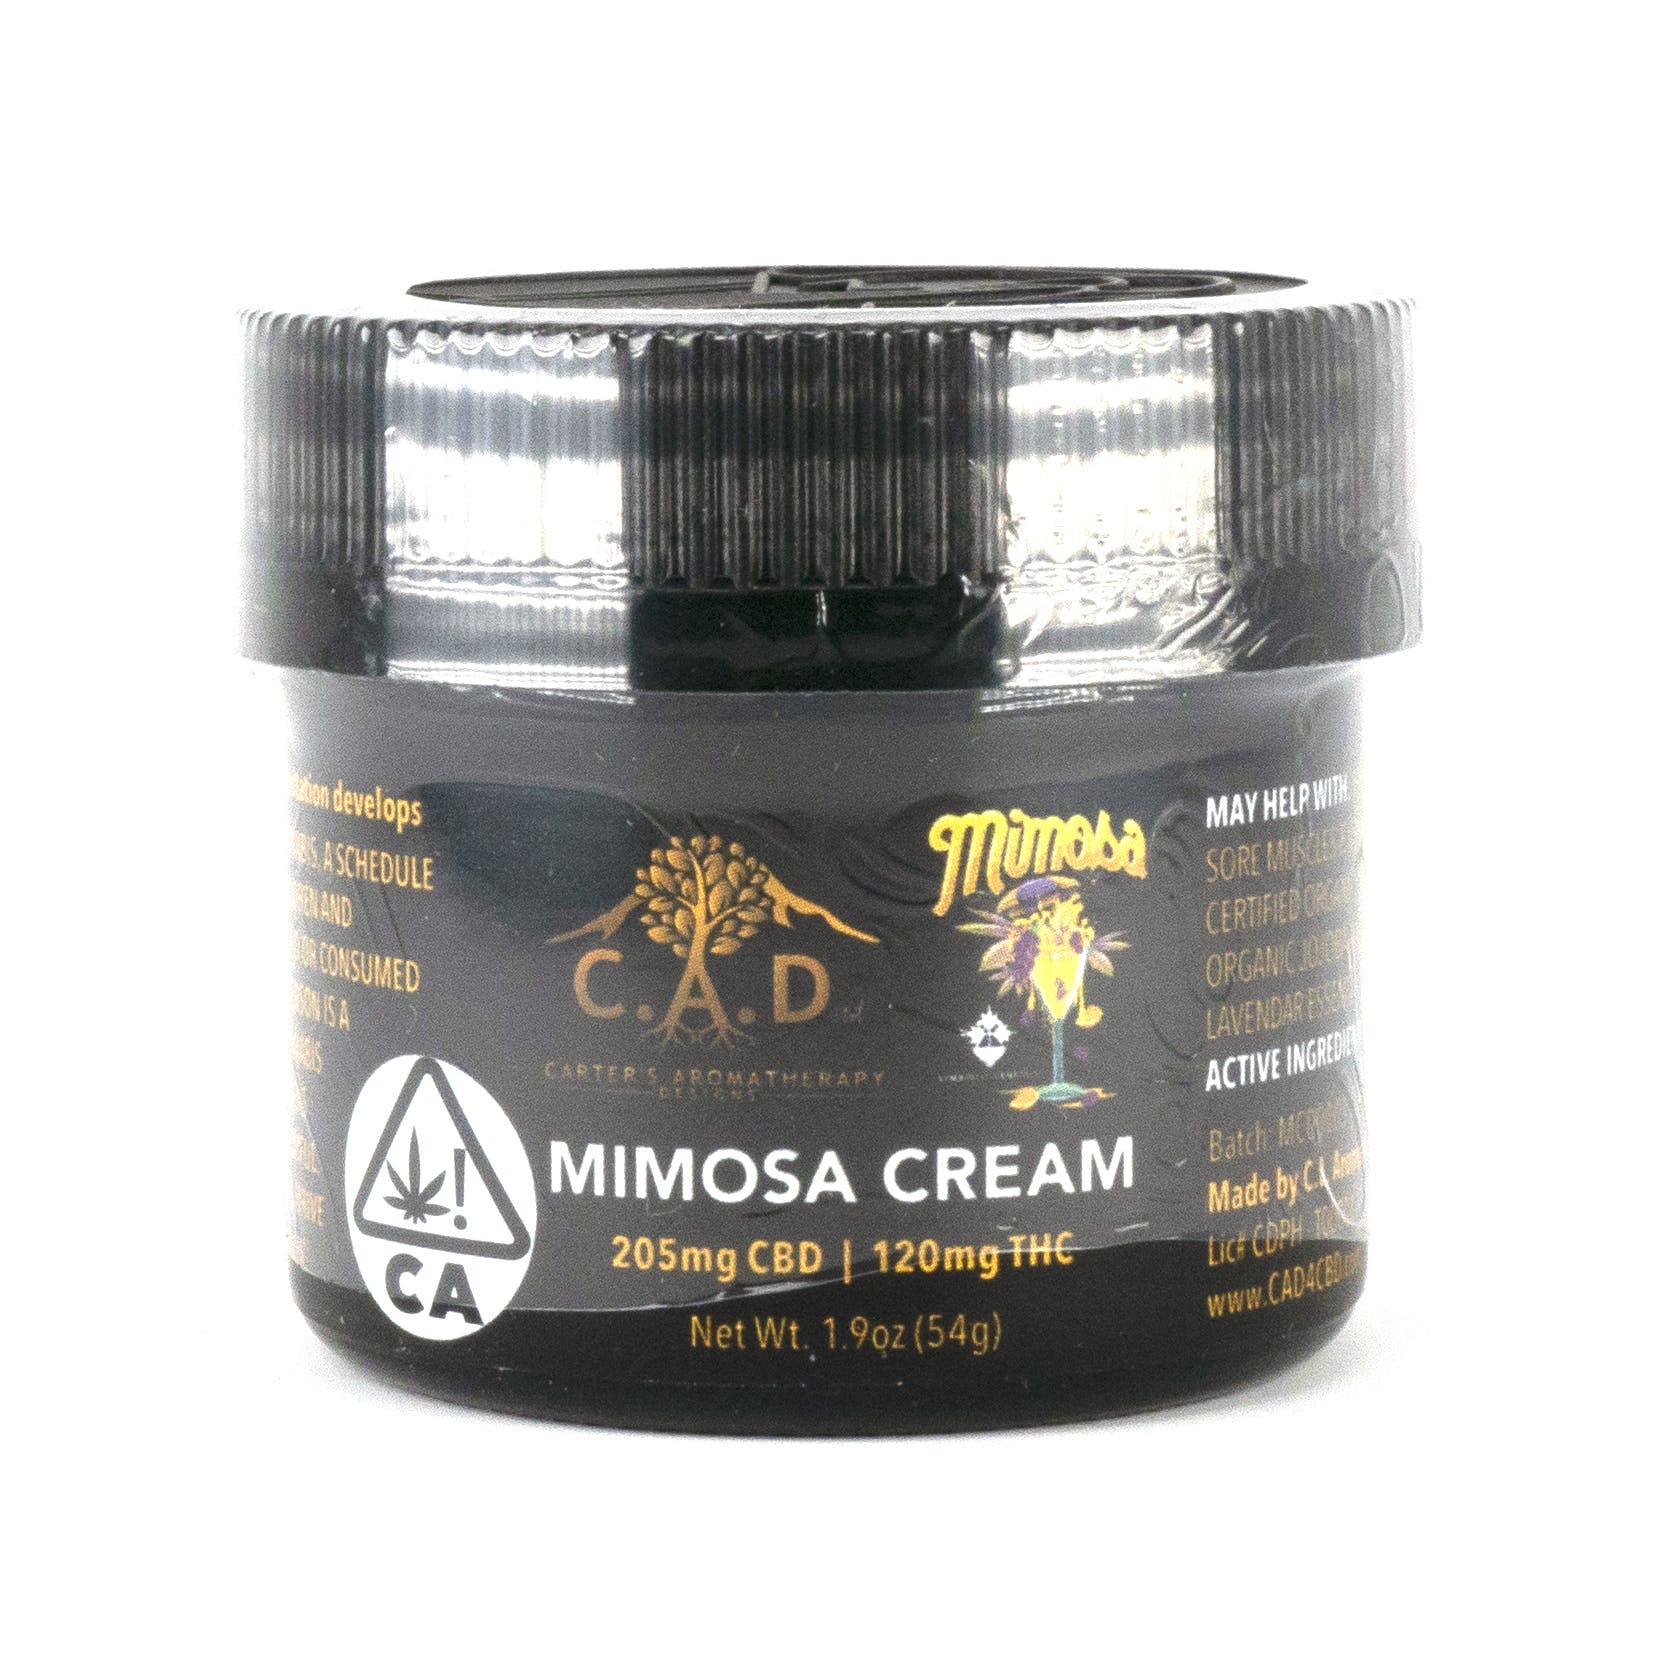 CAD: Mimosa Pain Cream 2oz